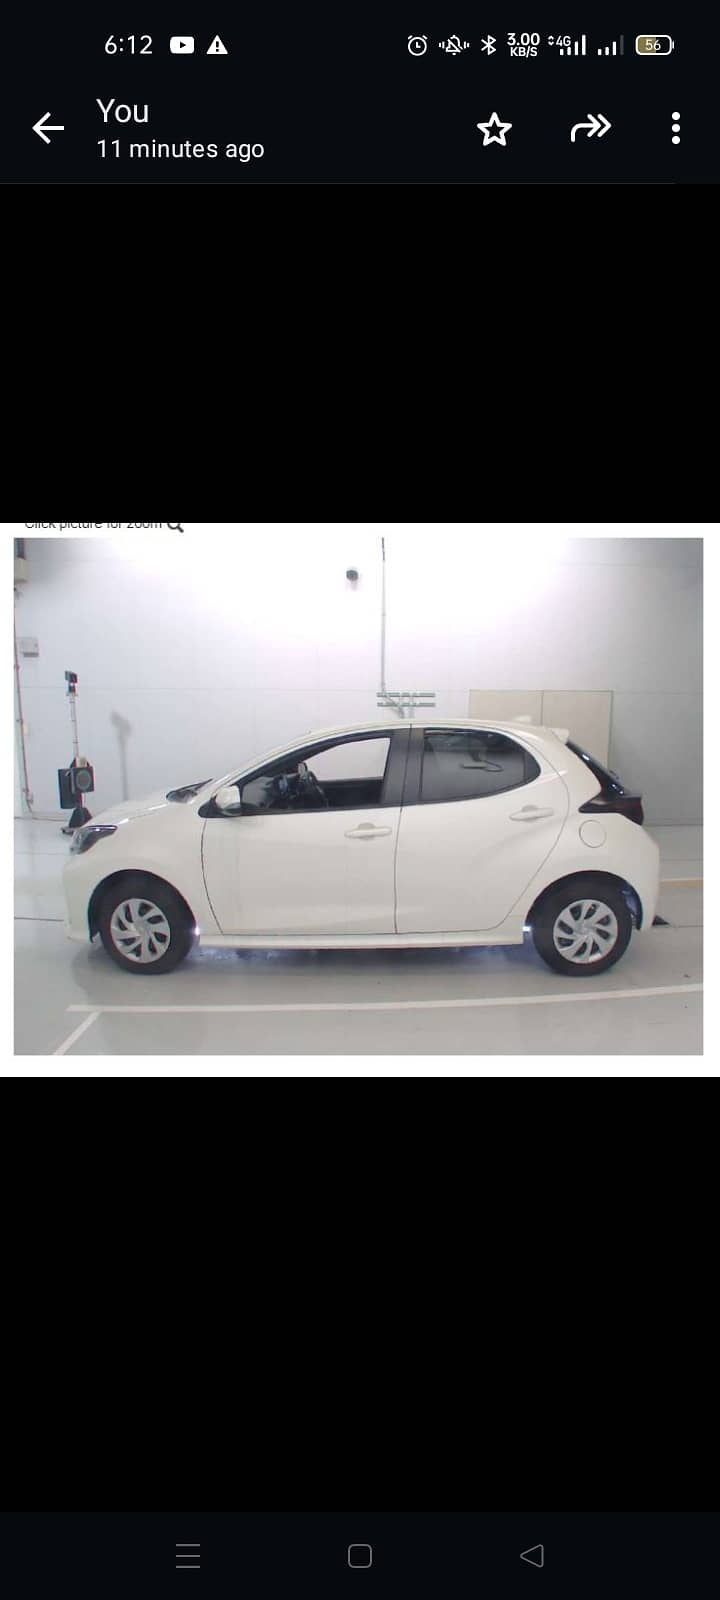 Toyota Yaris hashback full option X package 4.5 8